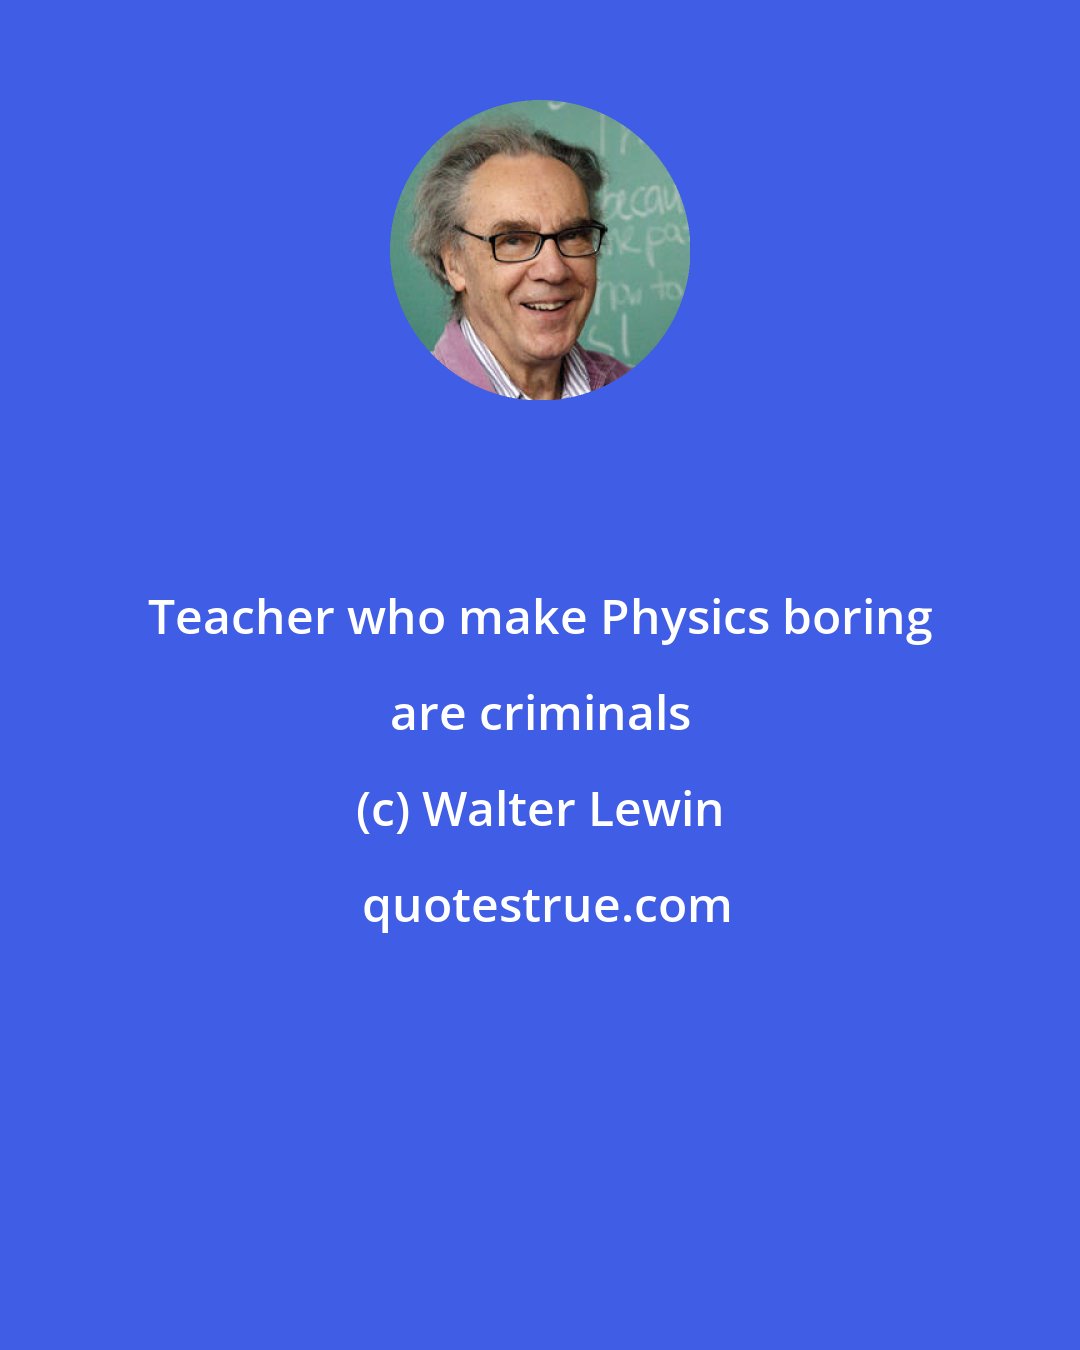 Walter Lewin: Teacher who make Physics boring are criminals